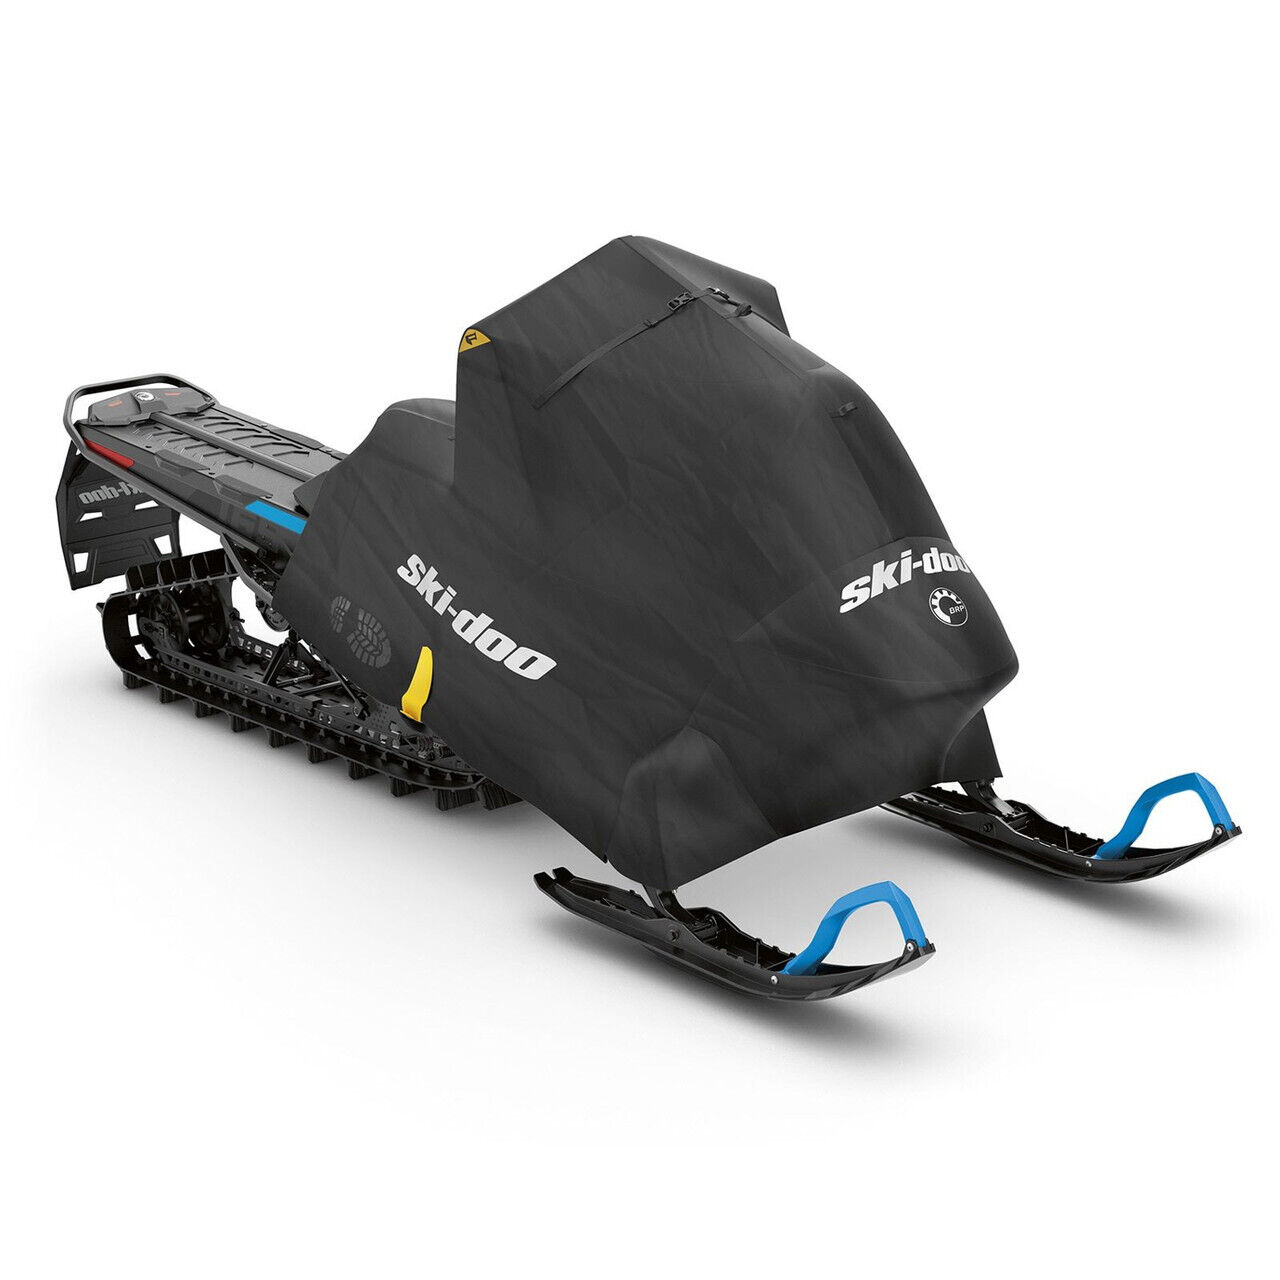 Ski-Doo Ride On Cover (ROC) System for REV Gen5, Rev Gen4 TNT, MXZ X 860202546